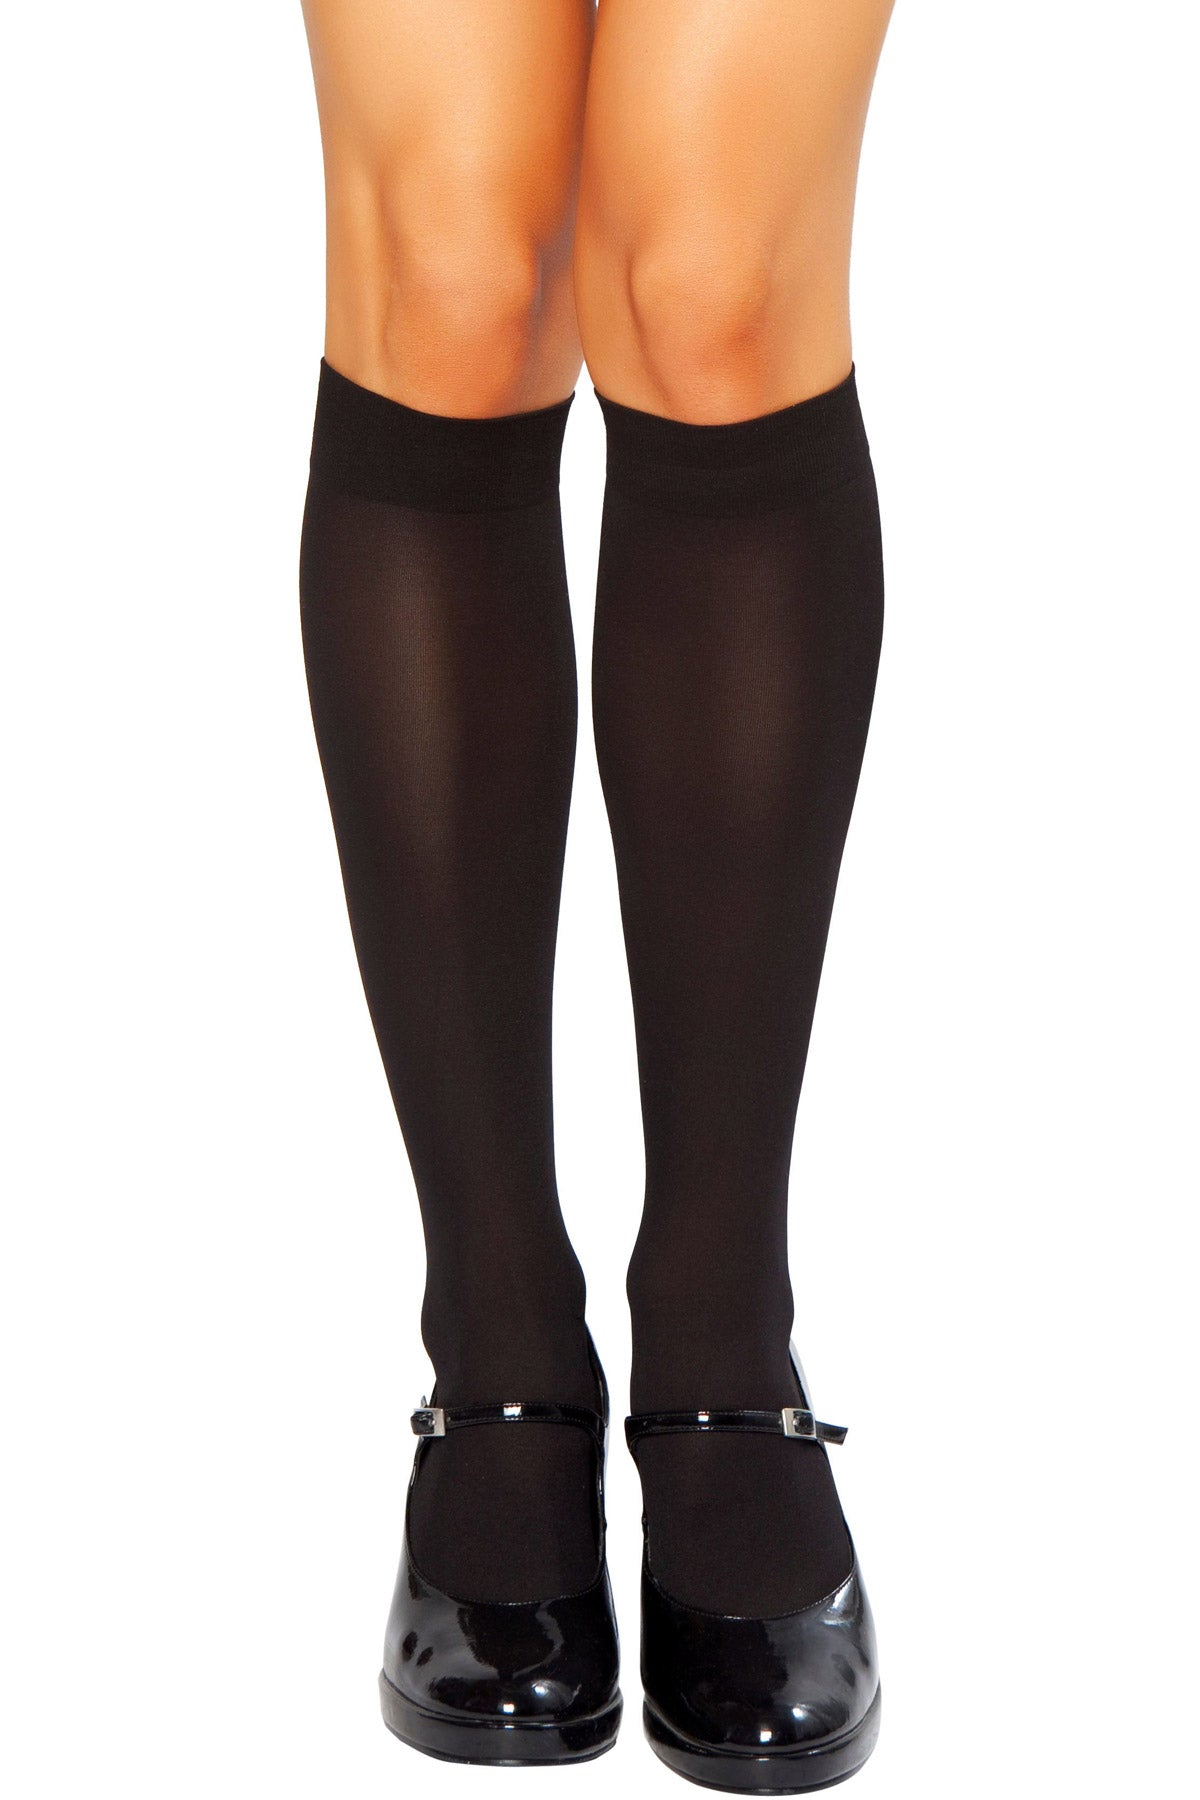 Cute Standard Regular Hosiery Knee High Stockings Roma  STC202